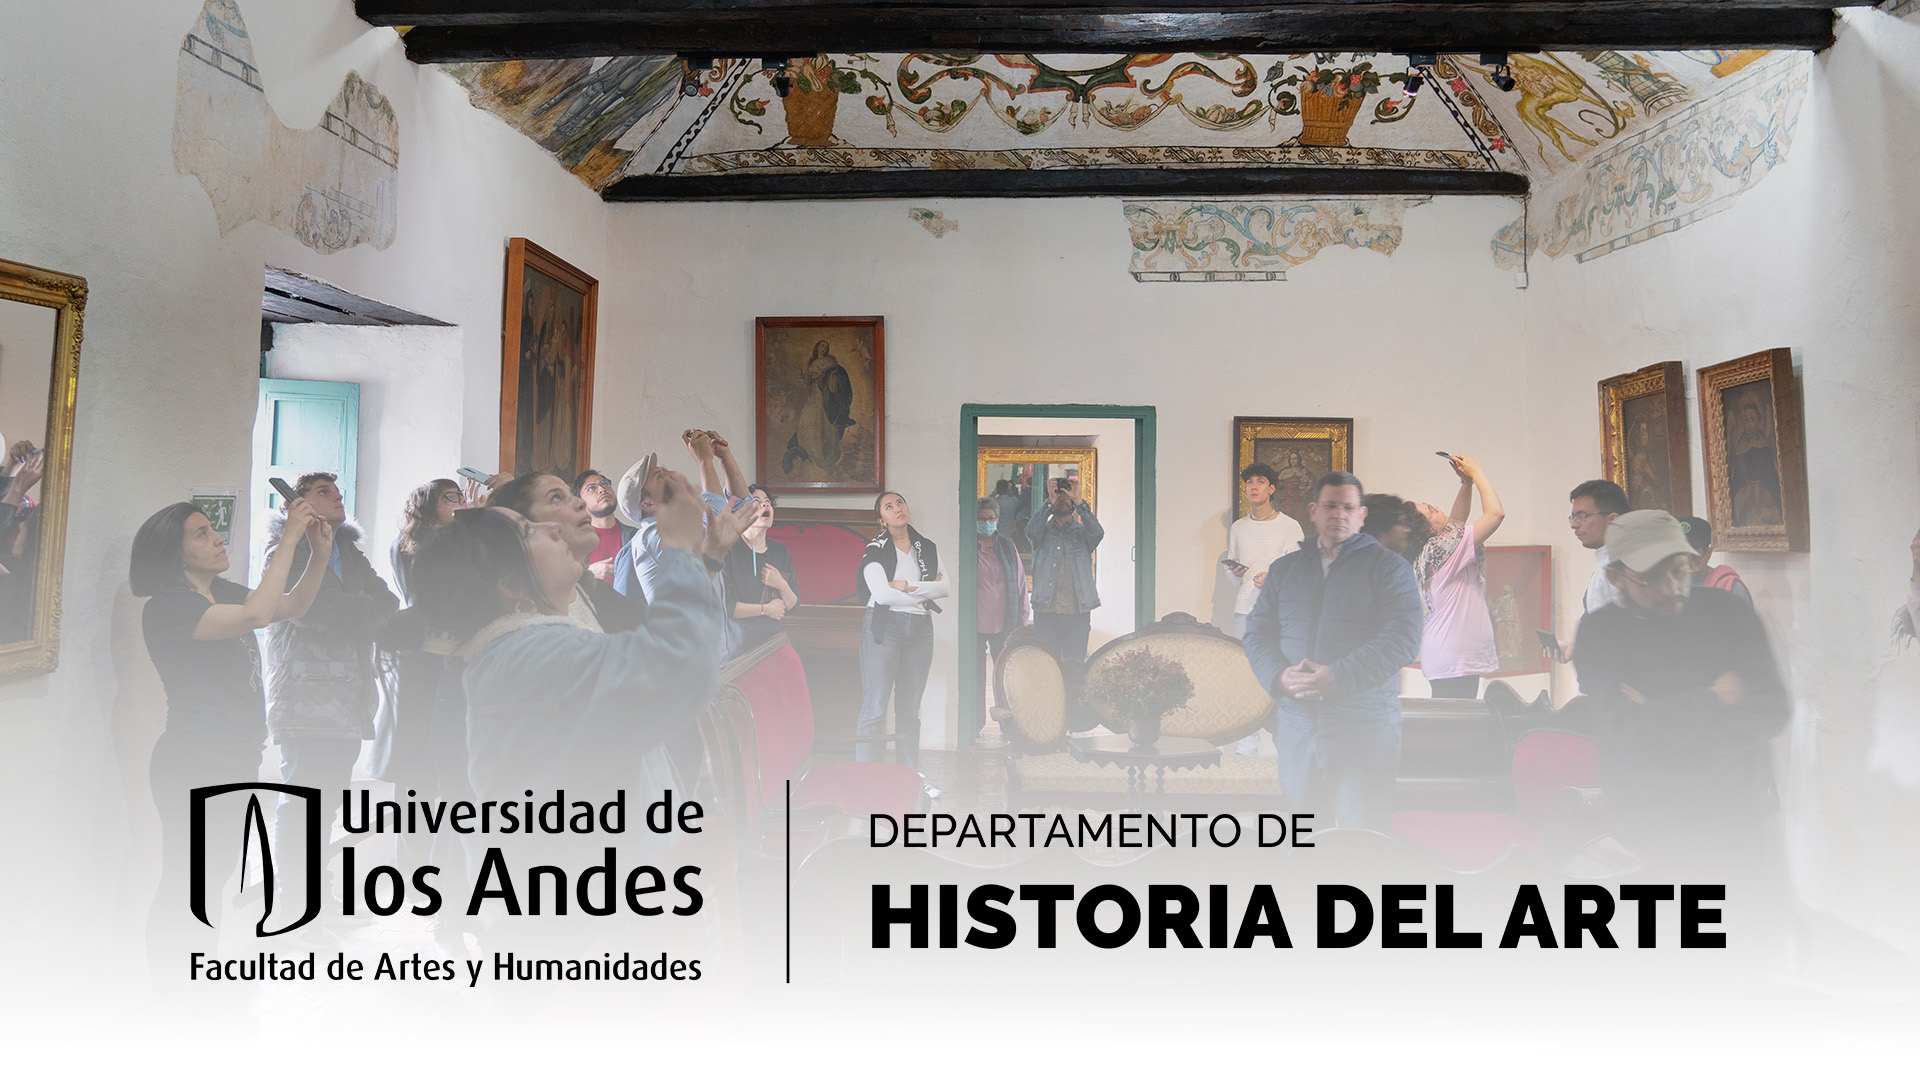 (c) Historiadelarte.uniandes.edu.co